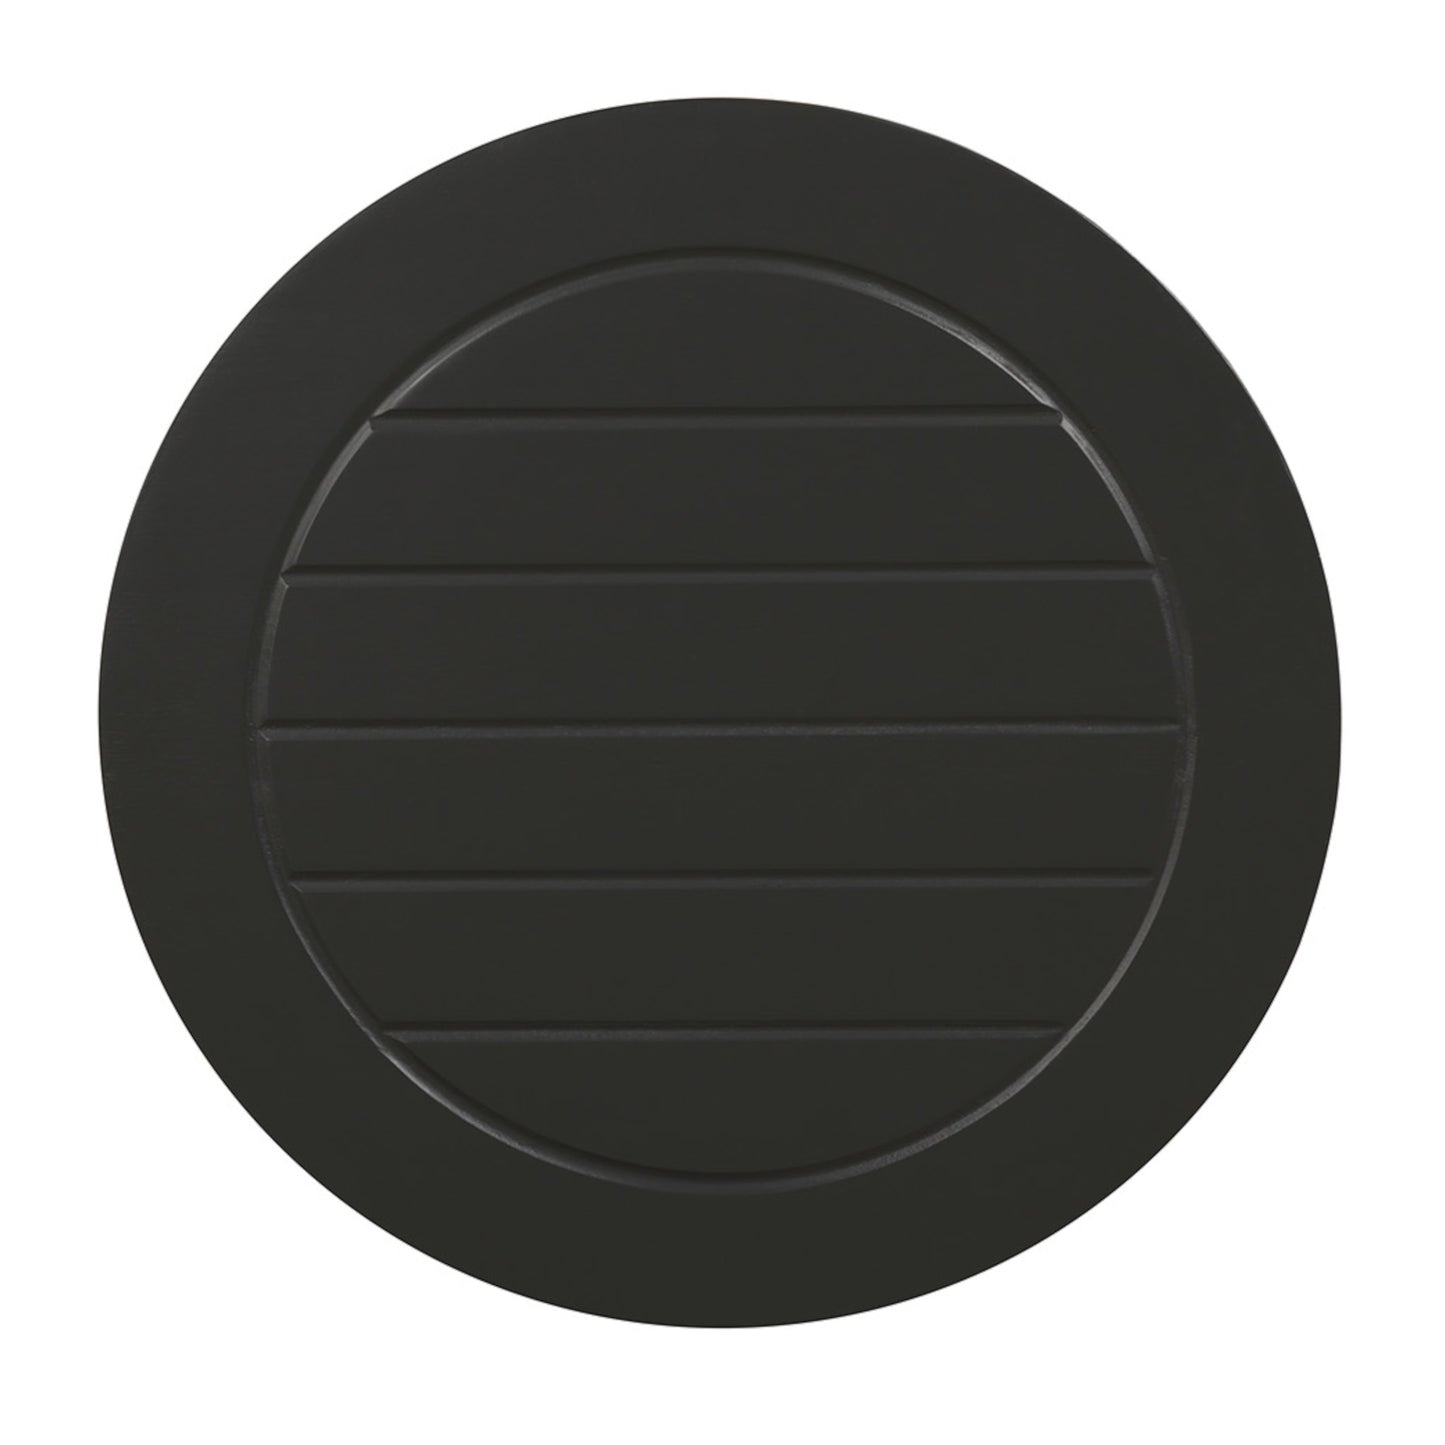 Hardwood Round Side Table - Black